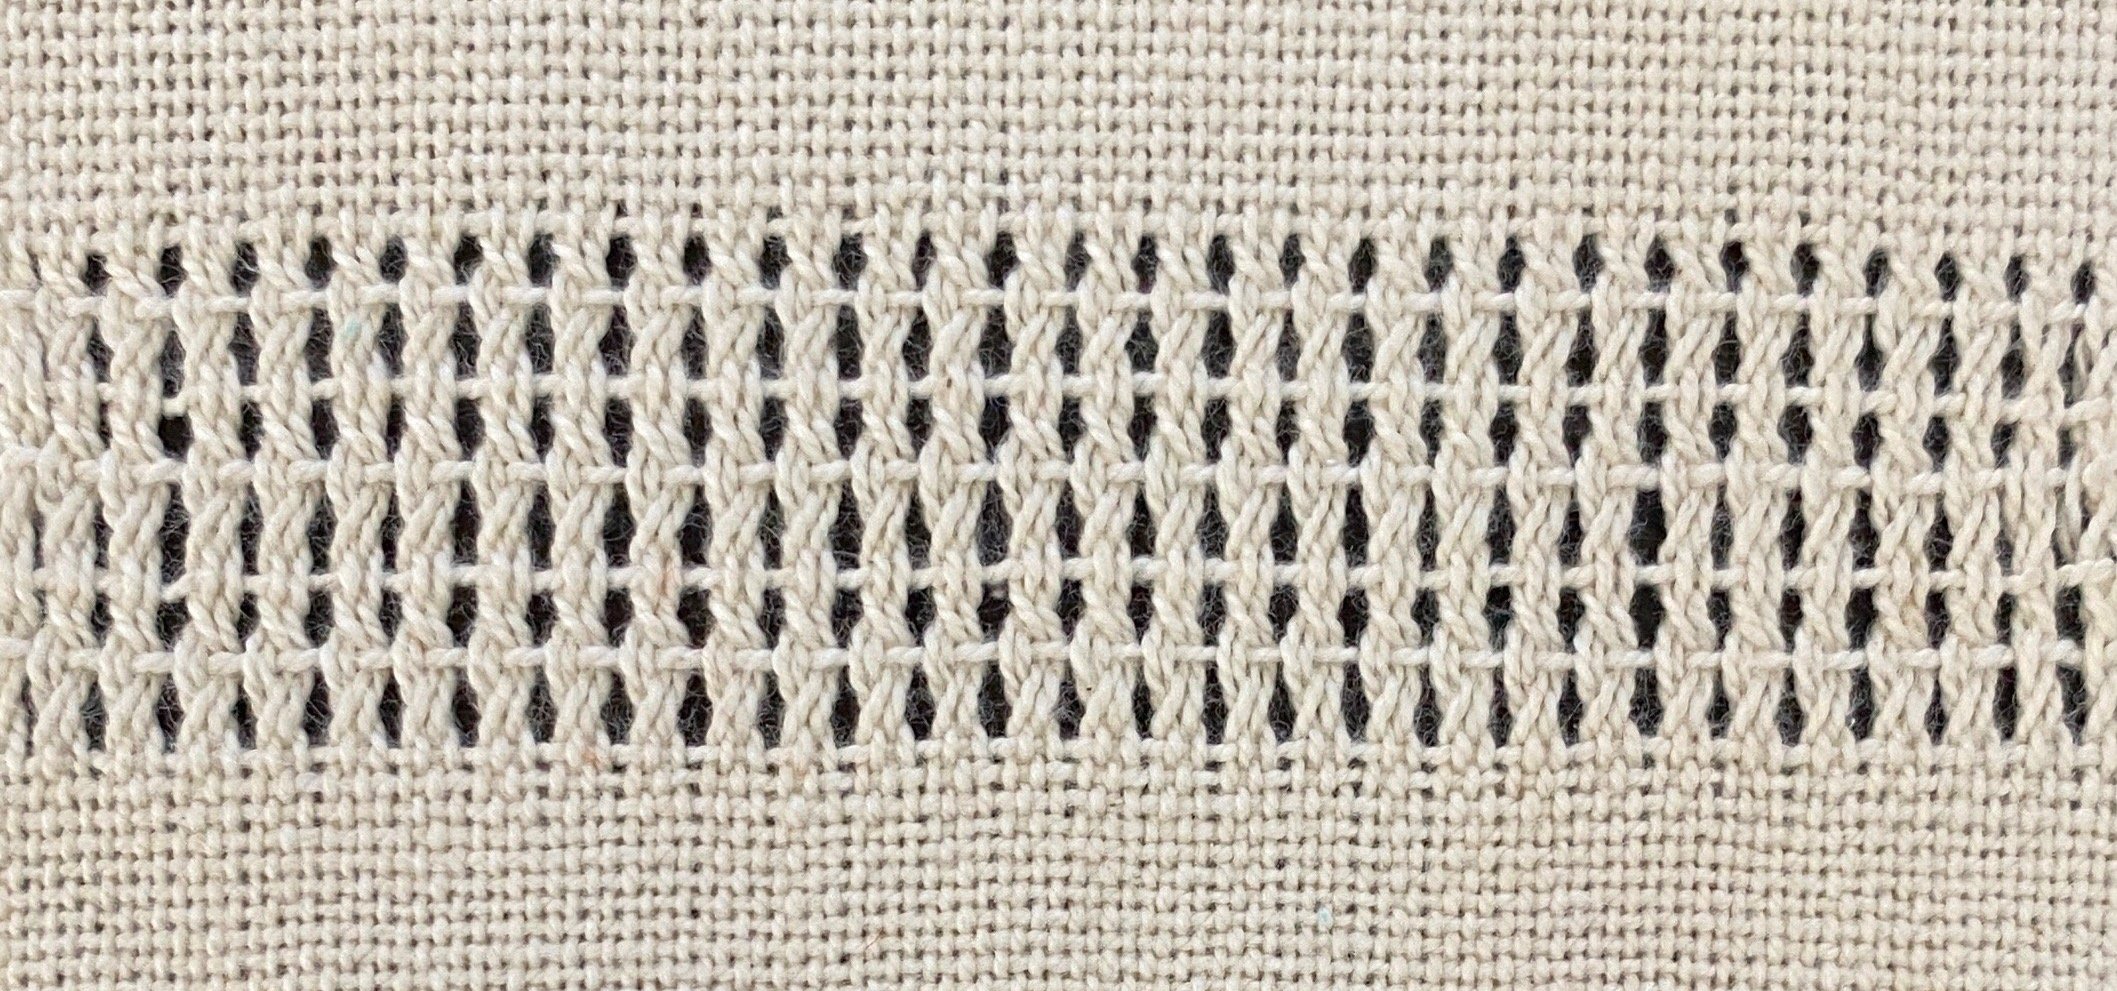 Hand-Manipulated Lace Weaving - Warped Fibers